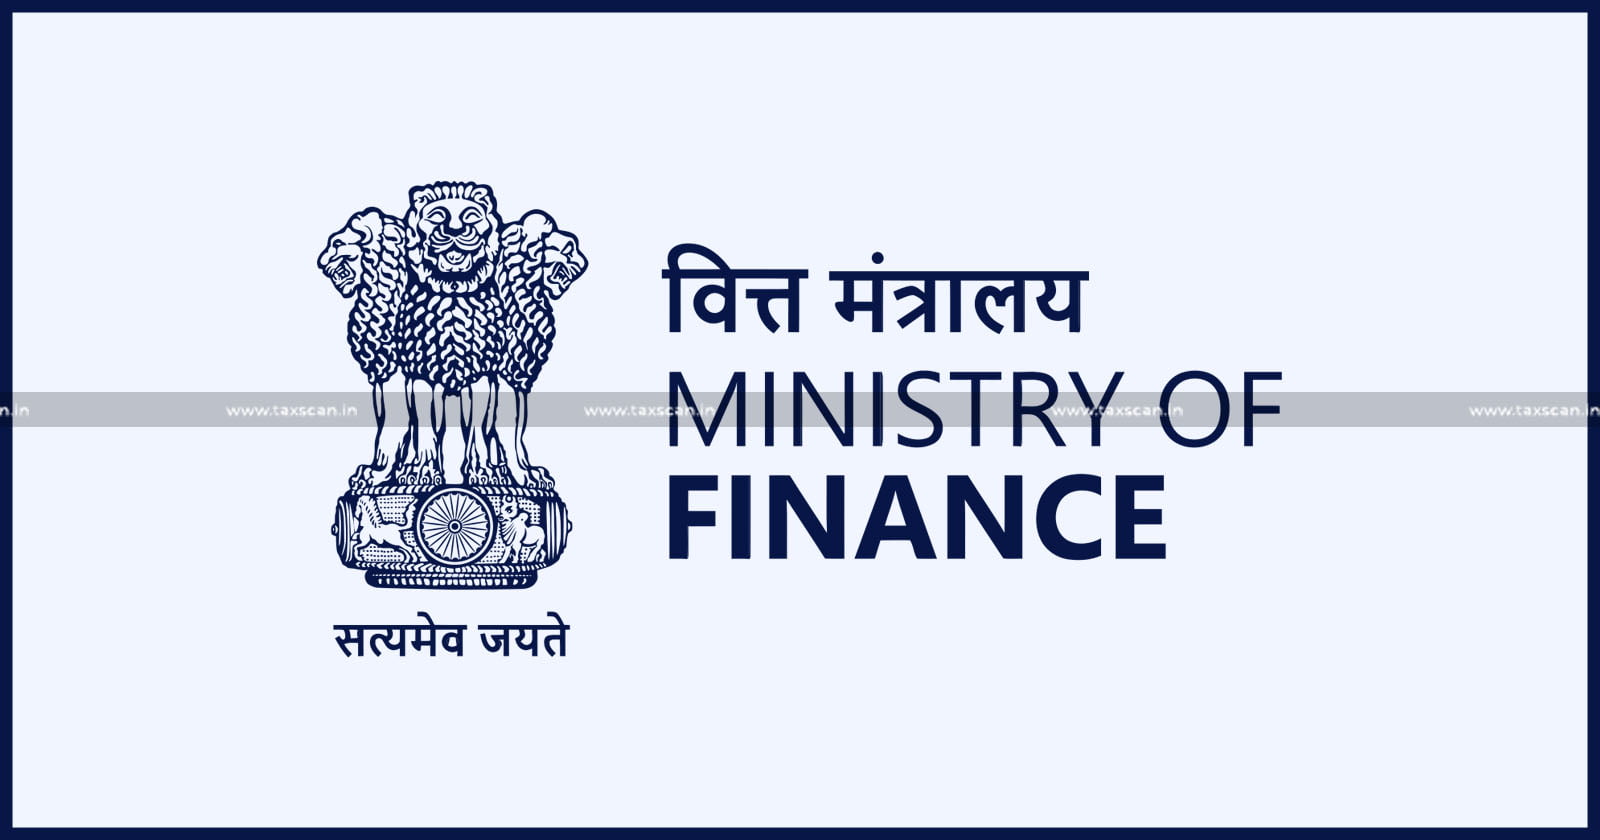 Govt - Govt notifies new Delegation of Financial Powers Rules - Delegation of Financial Powers Rules - Financial Powers Rules - Article 77 - taxscan